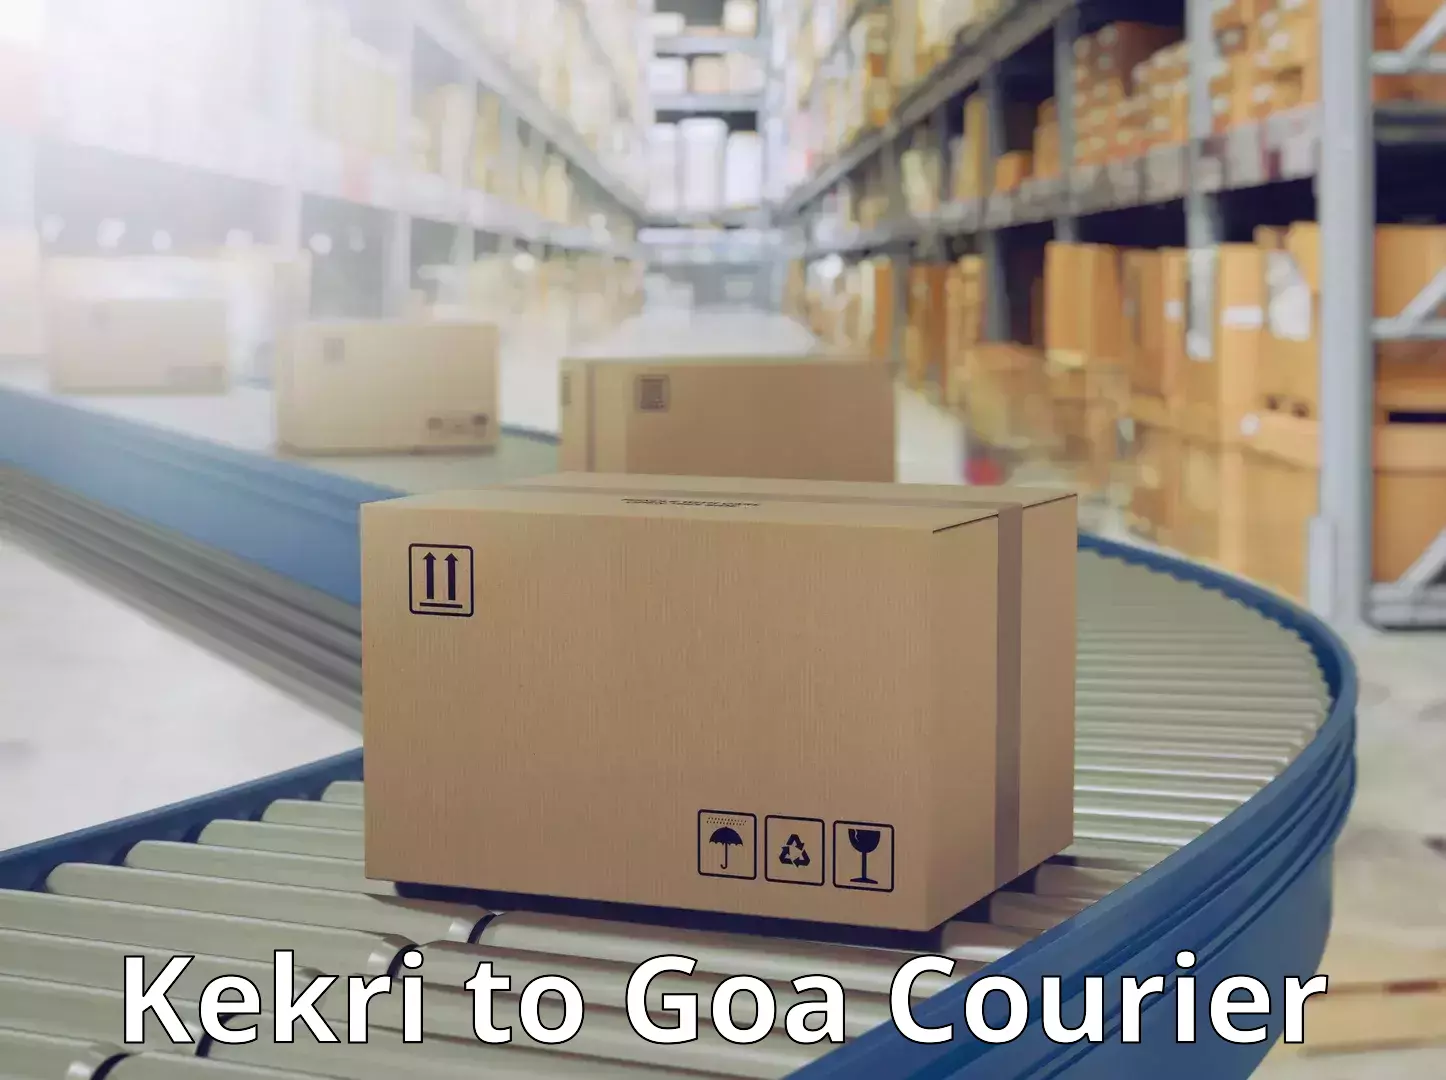 Efficient parcel tracking Kekri to Goa